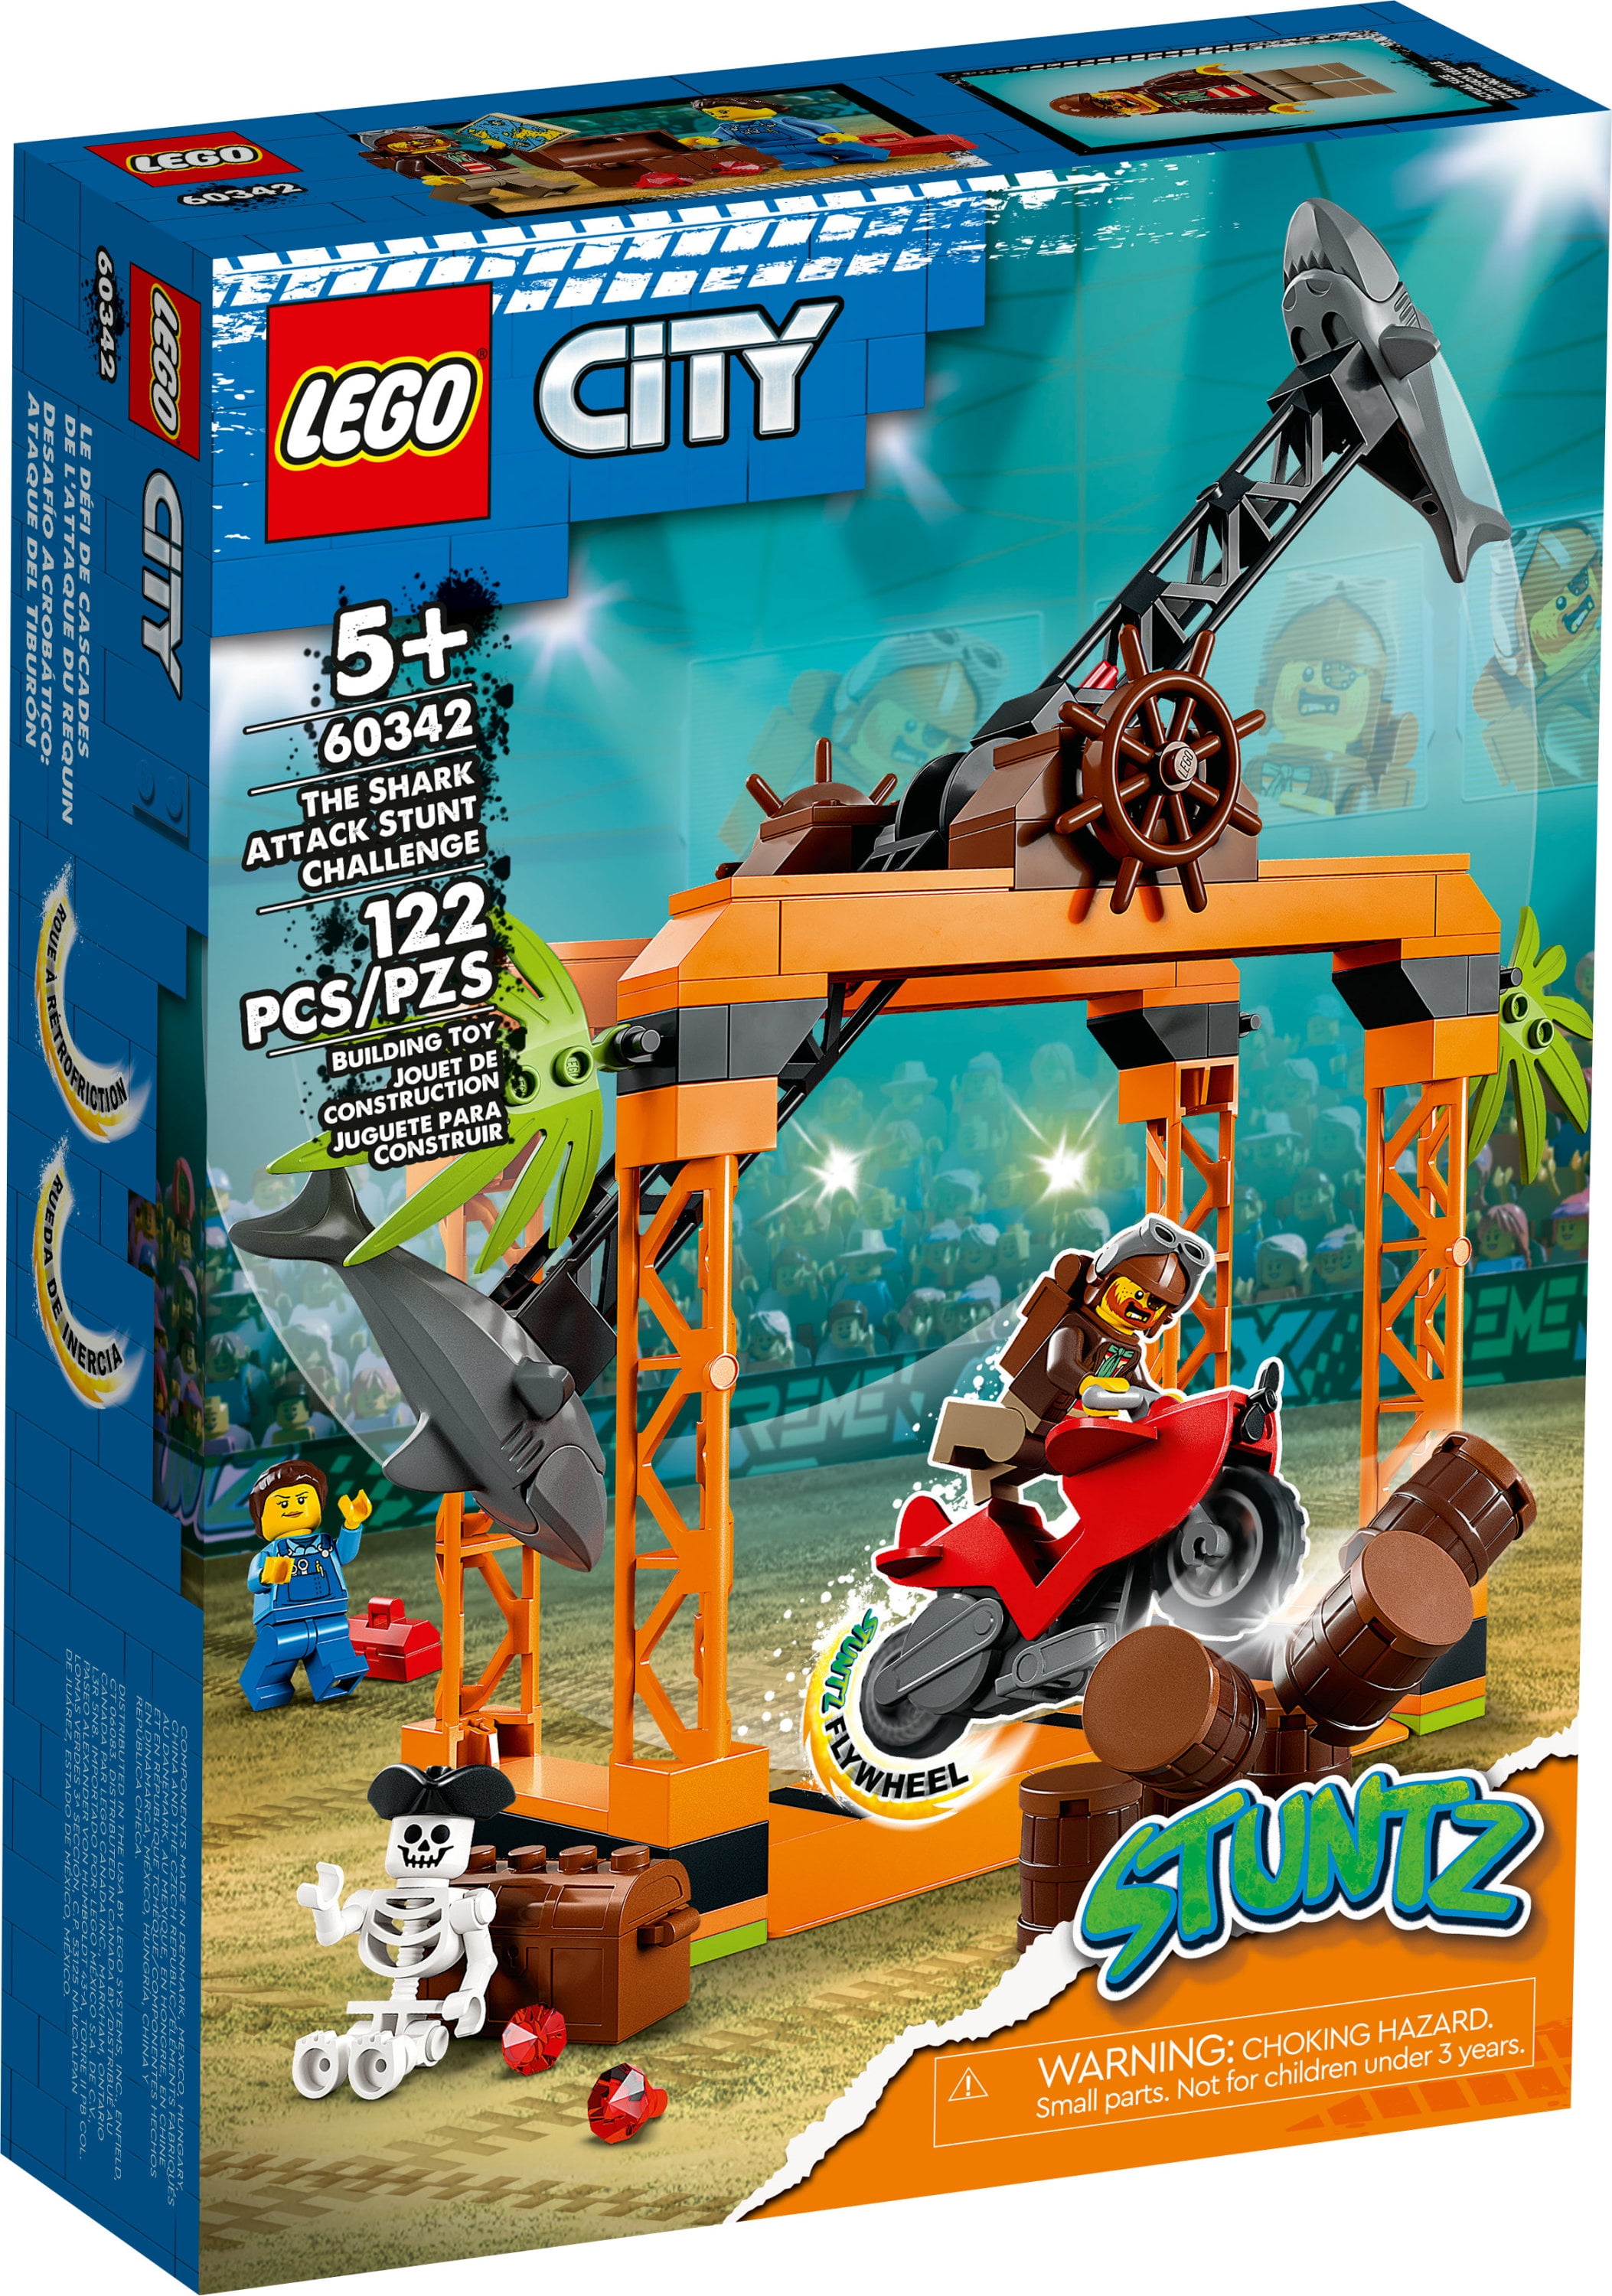 LEGO City Stuntz The Shark Attack Stunt Challenge 60342 Adventure Series  Toy with Flywheel Powered Stunt Bike & Racer Minifigure, Toys for Kids 5  Plus Year Old